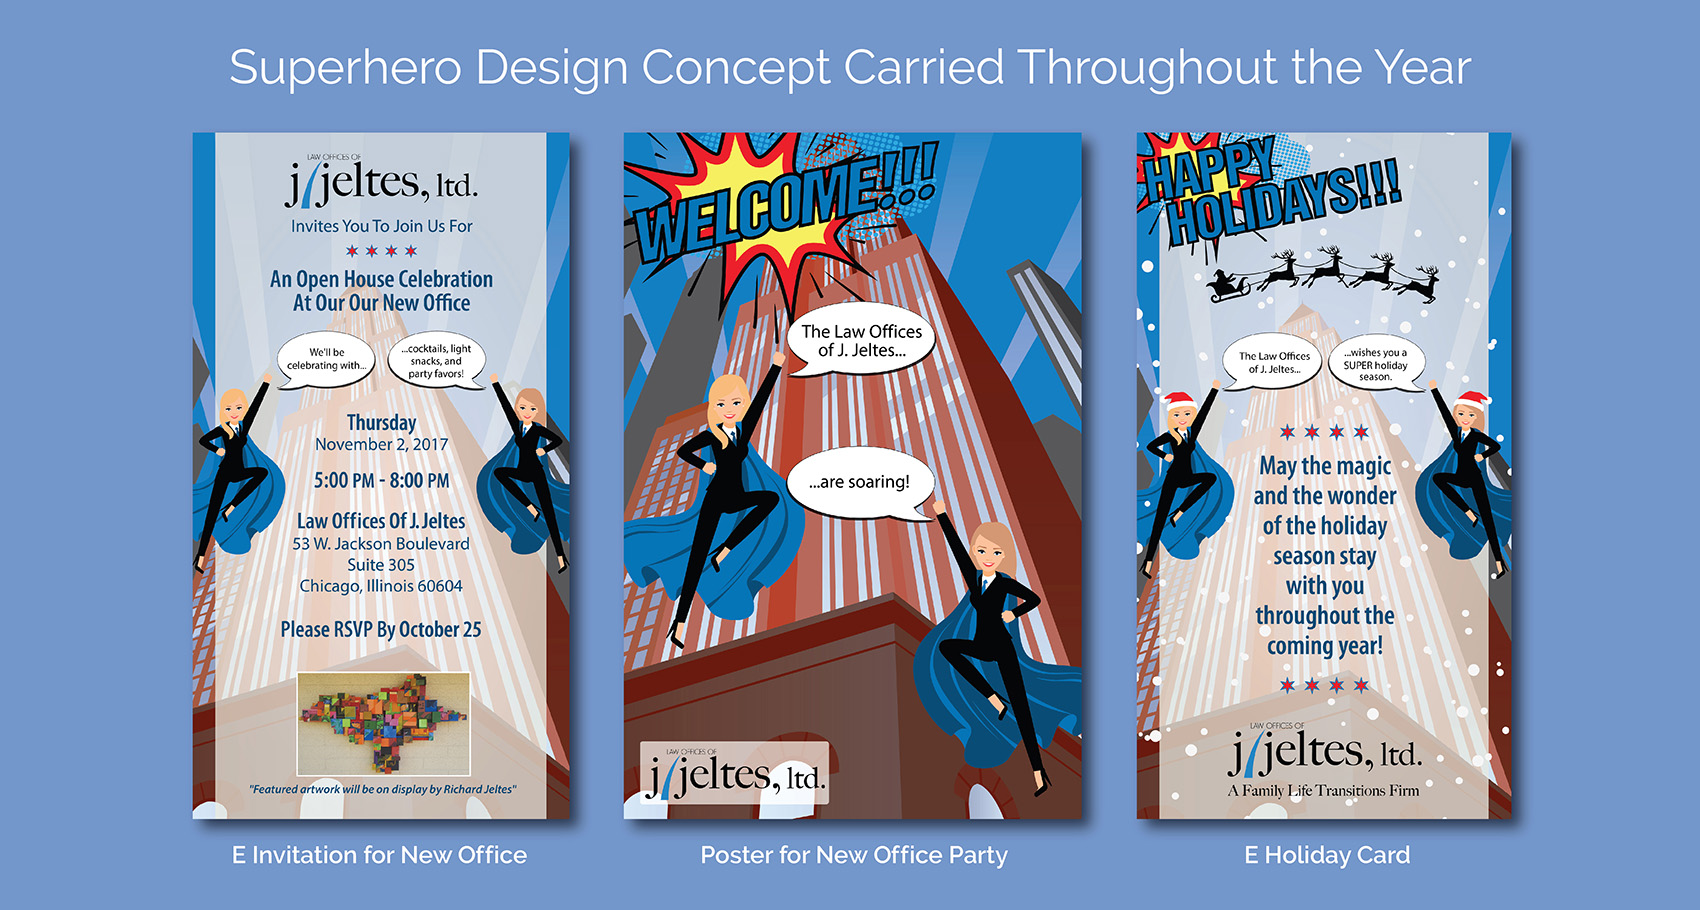 Superhero Design Concept of Design by Eclectik Design